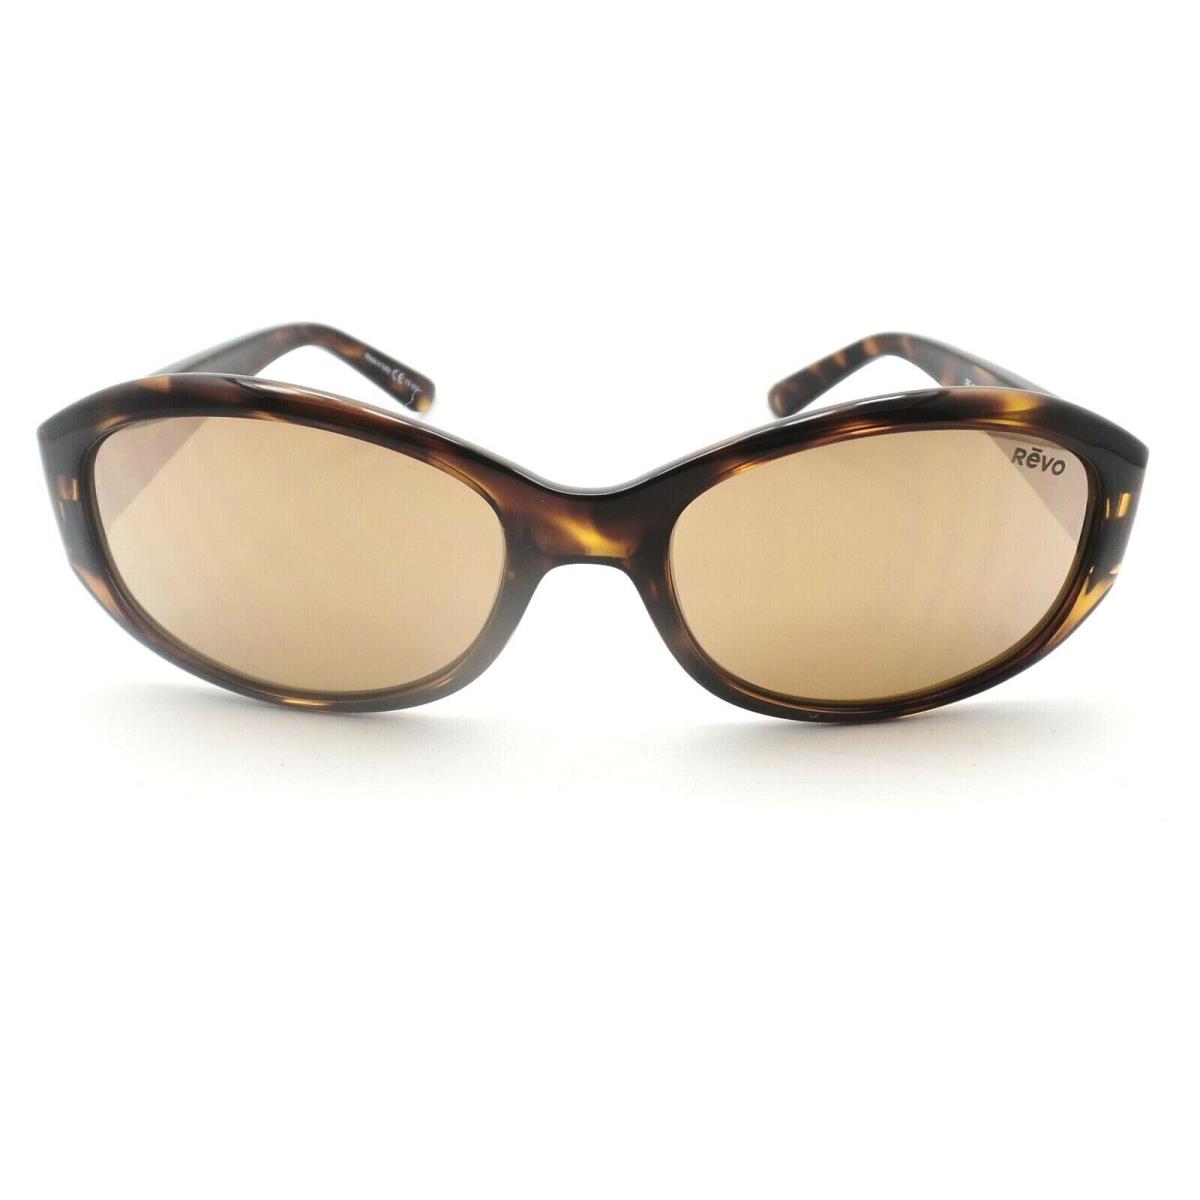 Revo sunglasses  - Tortoise Frame, Champagne Lens